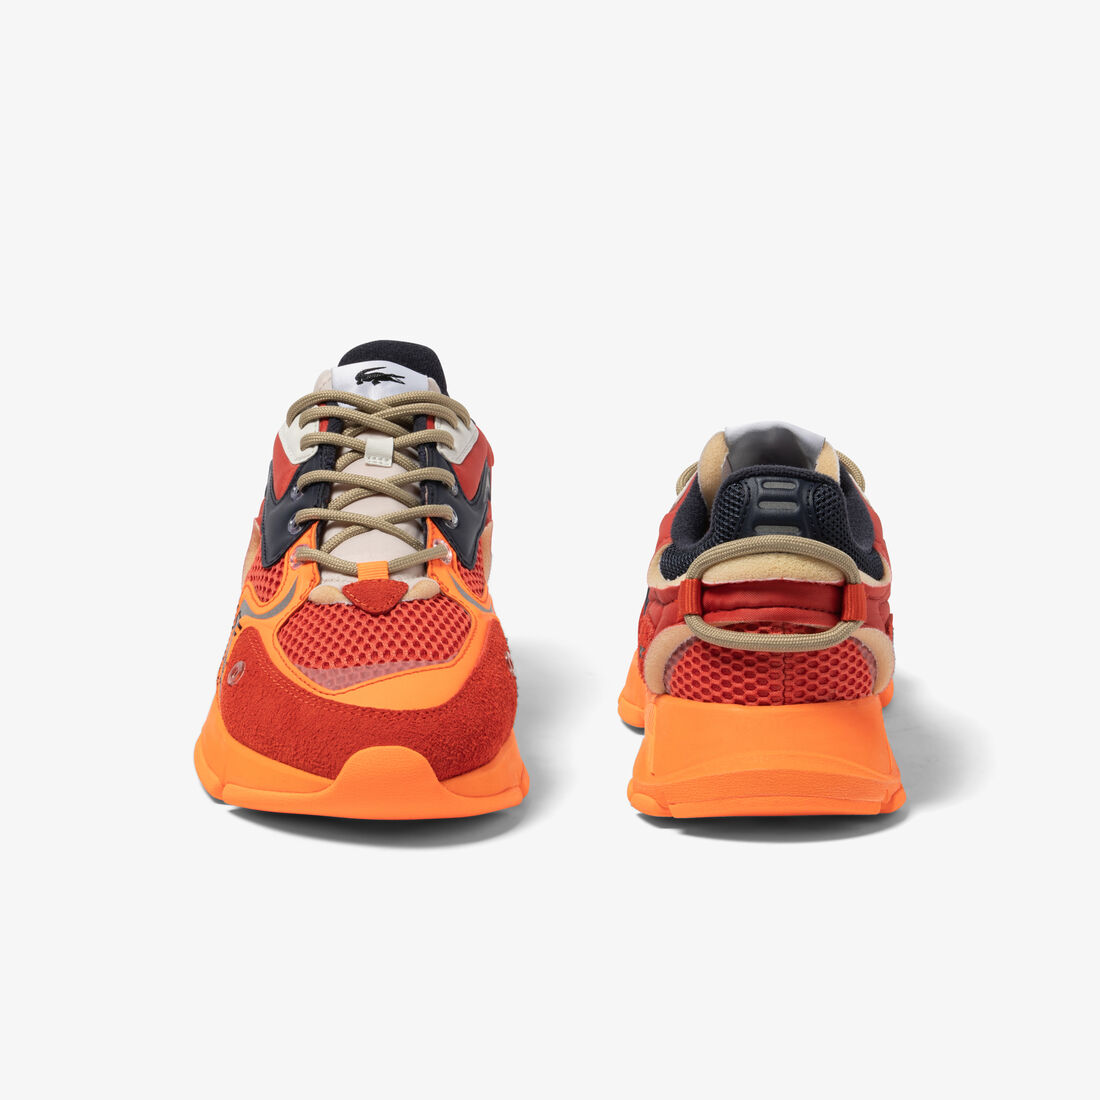 Lacoste L003 Neo Textil Sneakers Herren Rot Orange | MUOY-45237